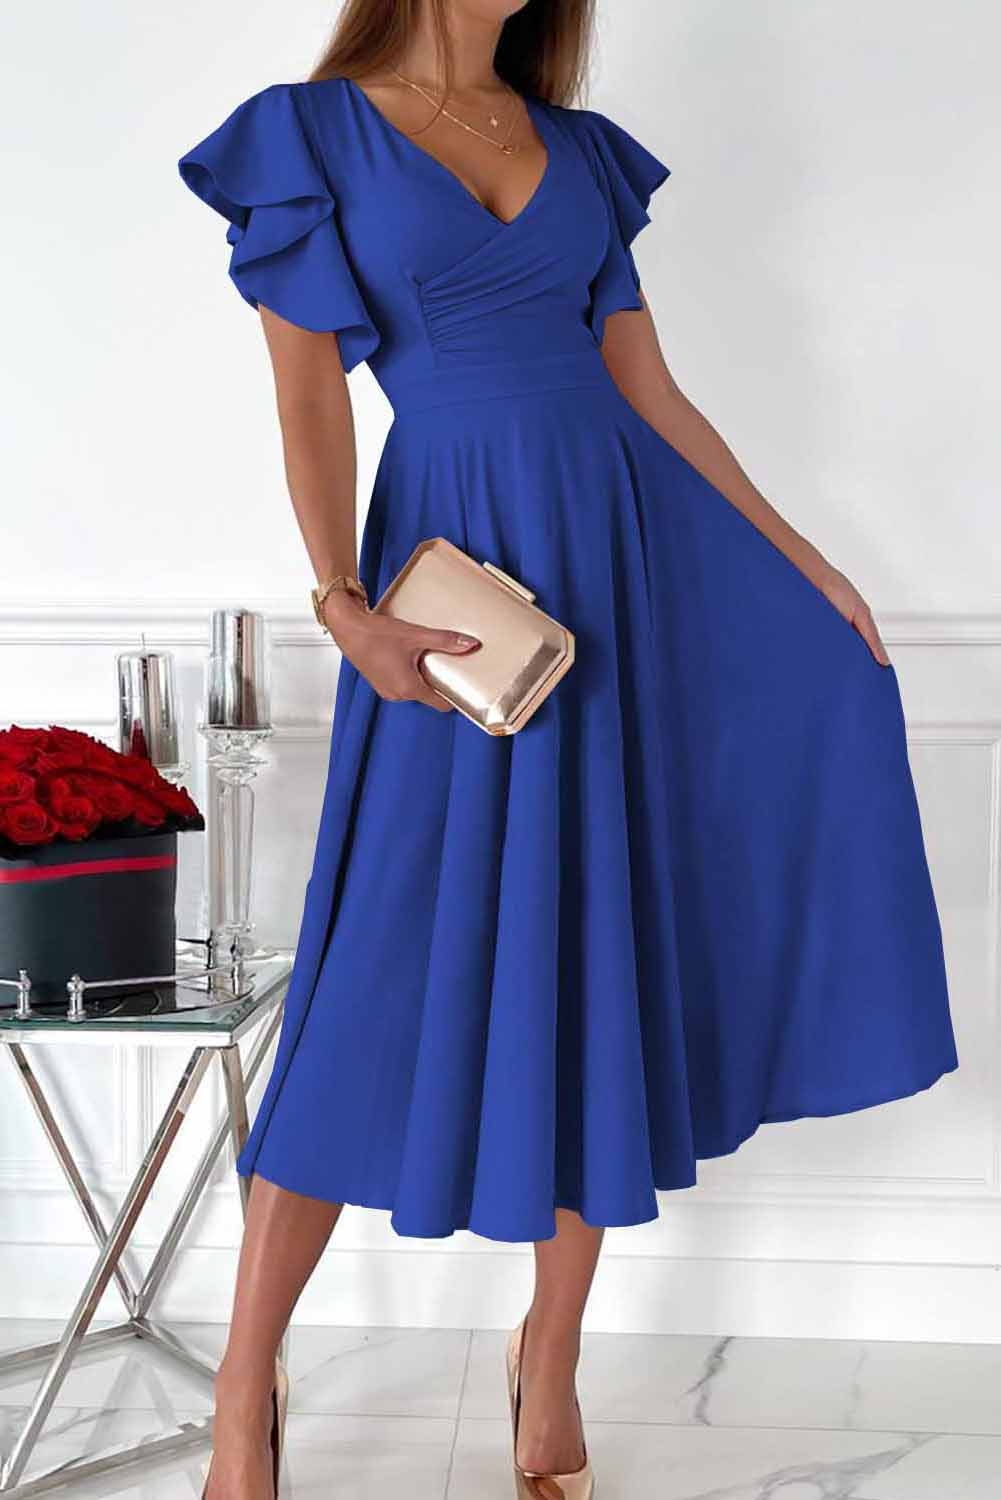 LC6110363-5-S, LC6110363-5-M, LC6110363-5-L, LC6110363-5-XL, LC6110363-5-2XL, Blue Womens V Neck Ruffle Sleeve Wrap Dress Midi Dress Cocktail Party Dress